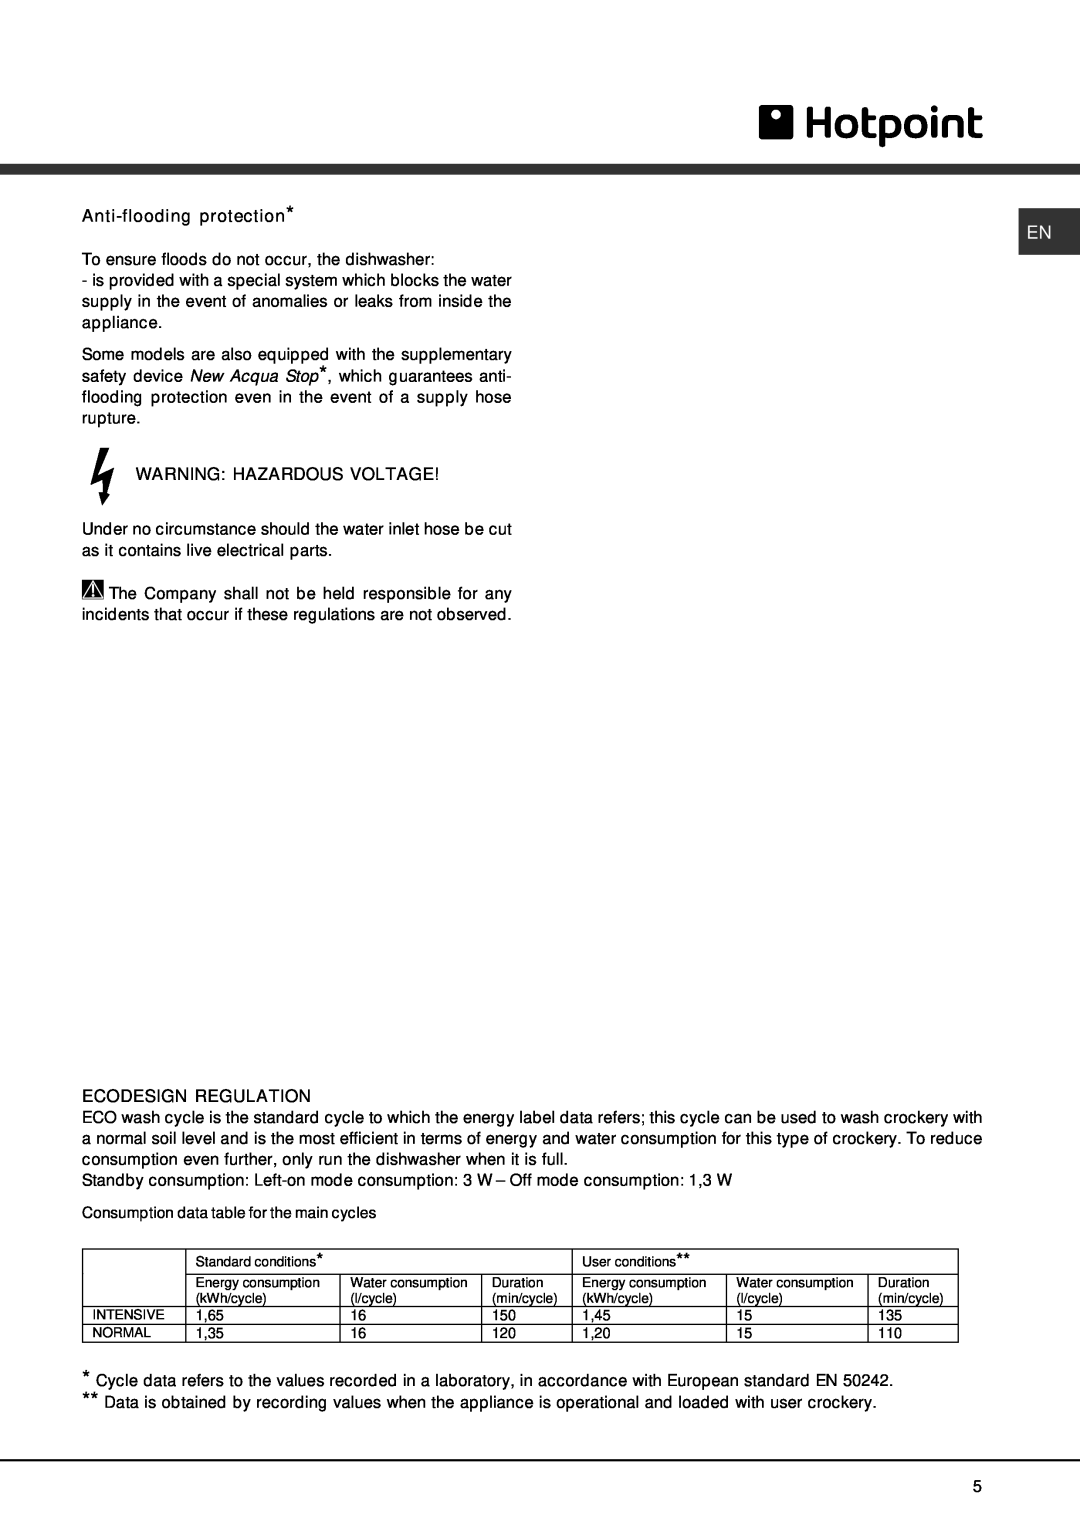 Hotpoint FDEF 4101 manual Anti-floodingprotection, Warning Hazardous Voltage, Ecodesign Regulation 